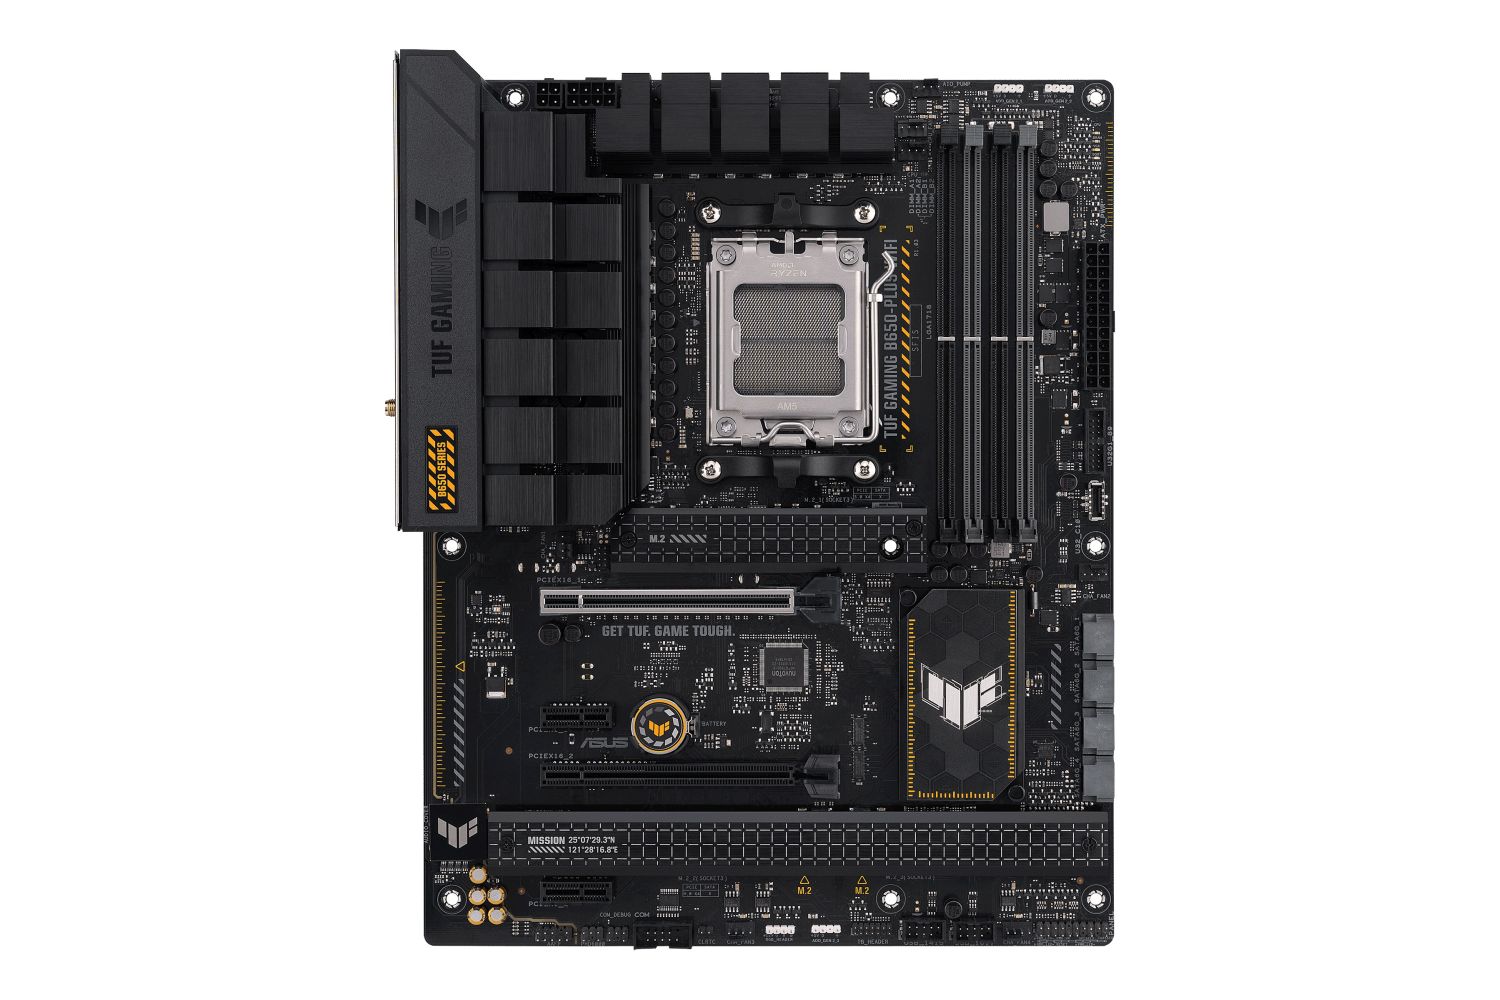 MSI Unveils AMD B650 Series Motherboard Lineup –